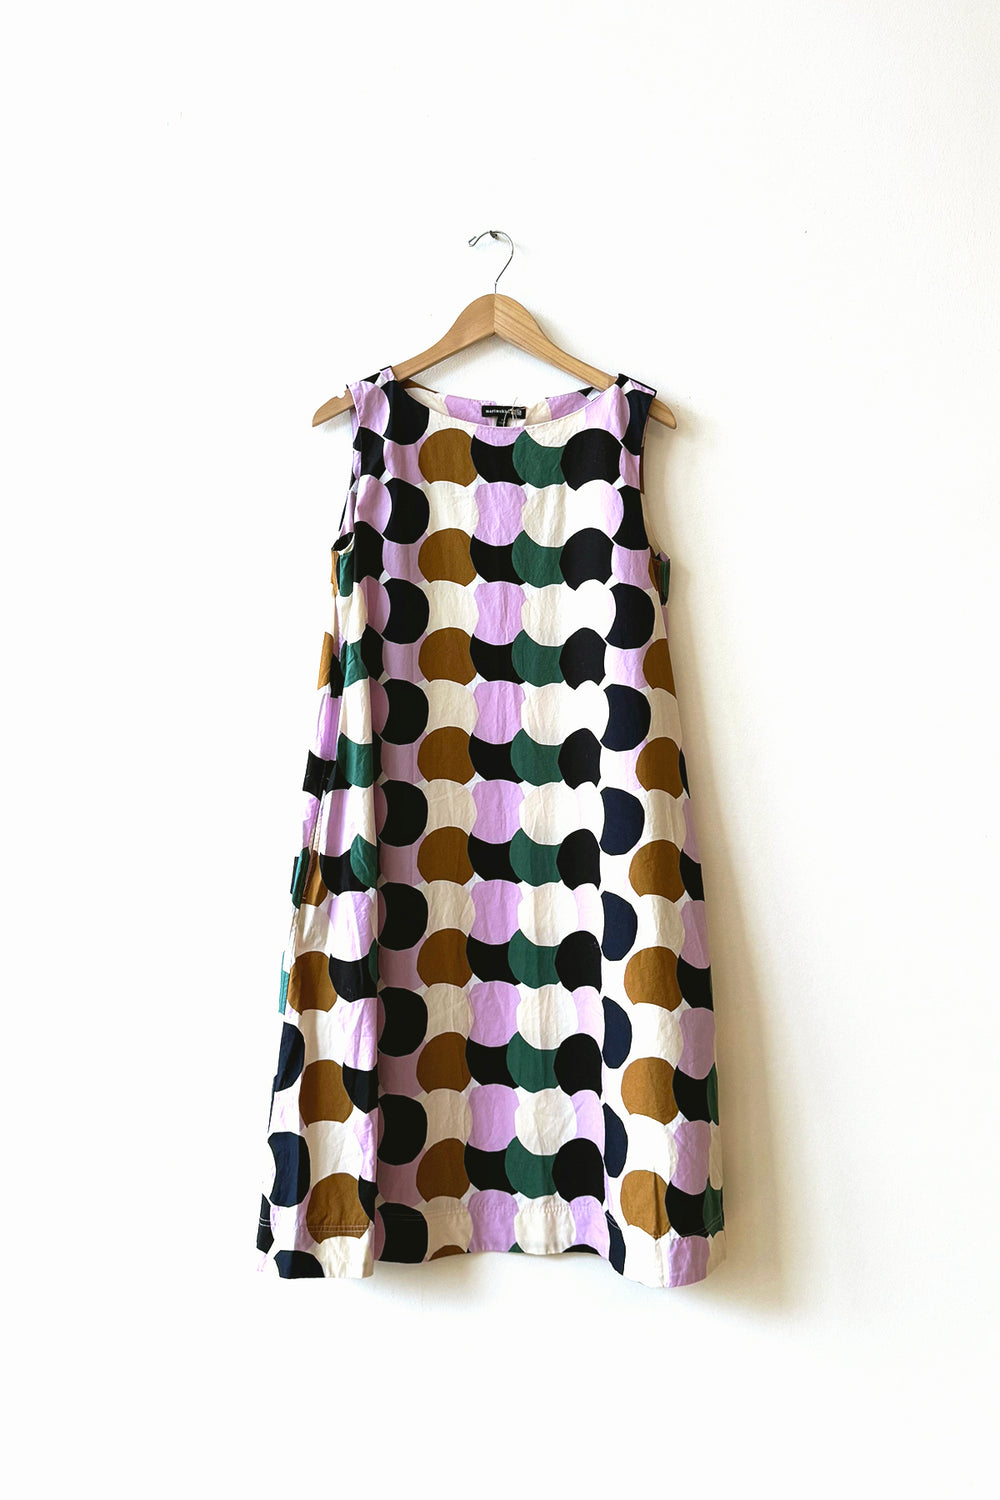 Marimekko for Uniqlo Long Cotton Dress (no tags)